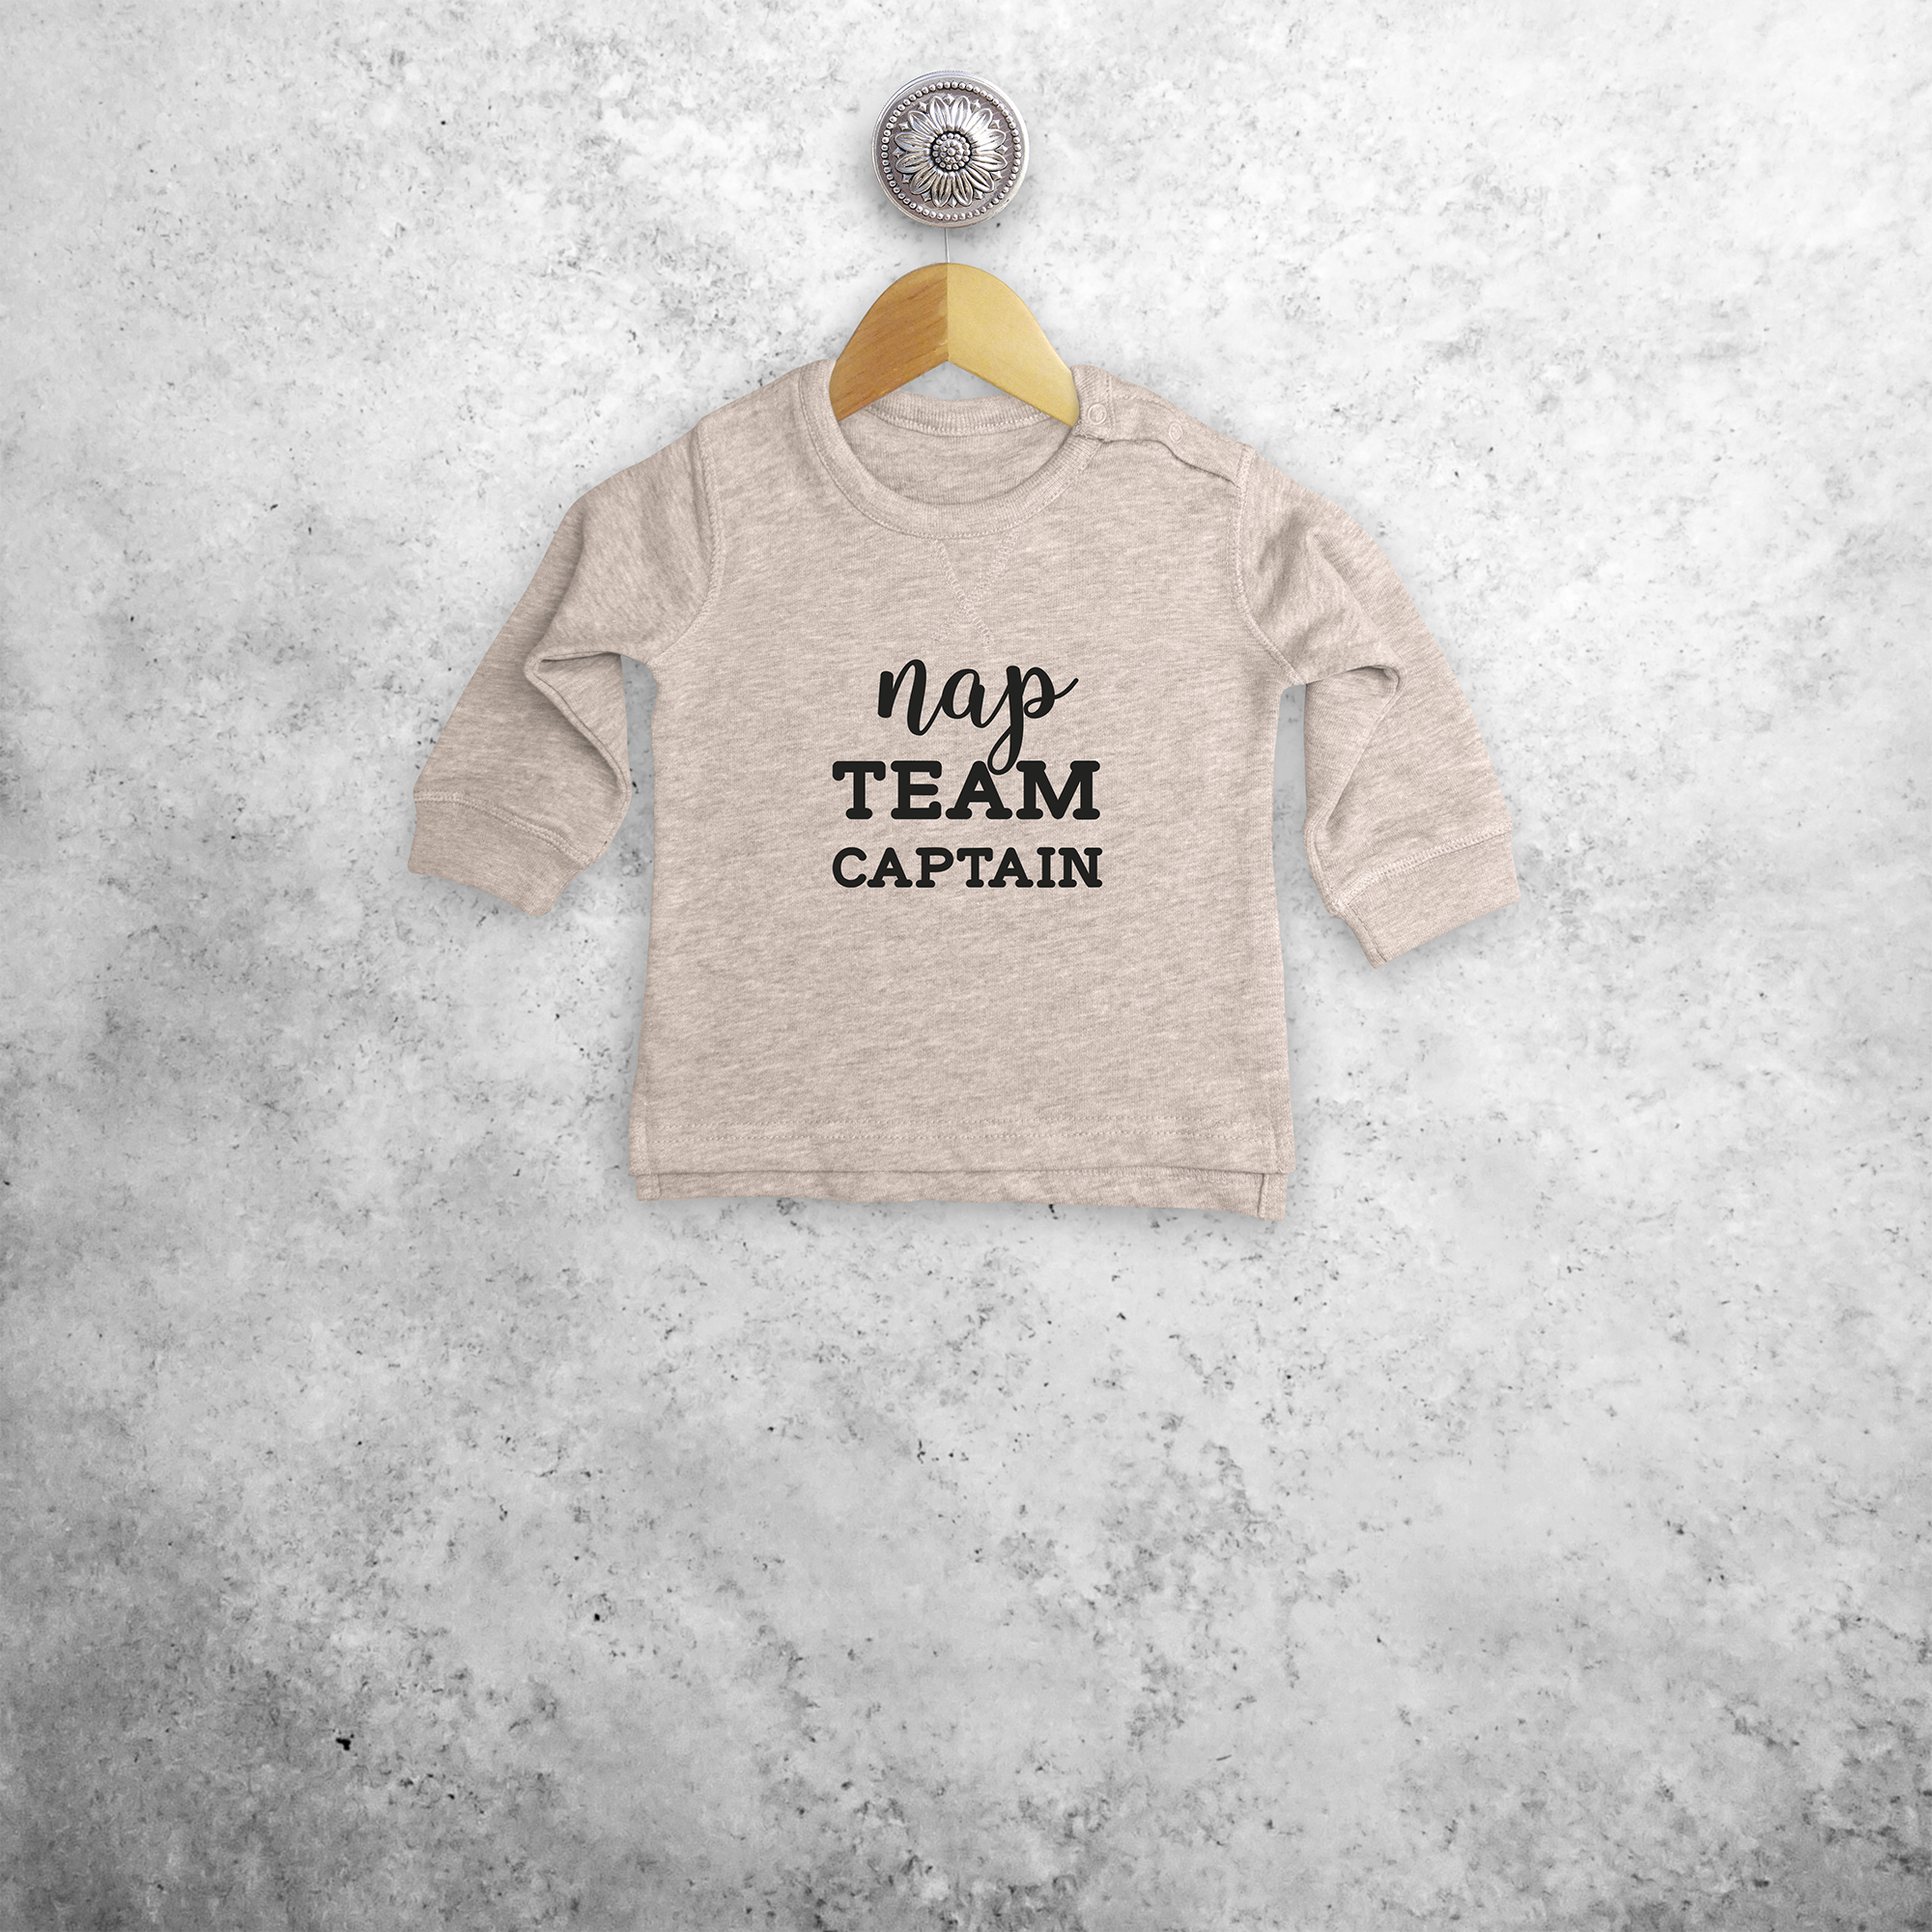 'Nap team captain' baby sweater